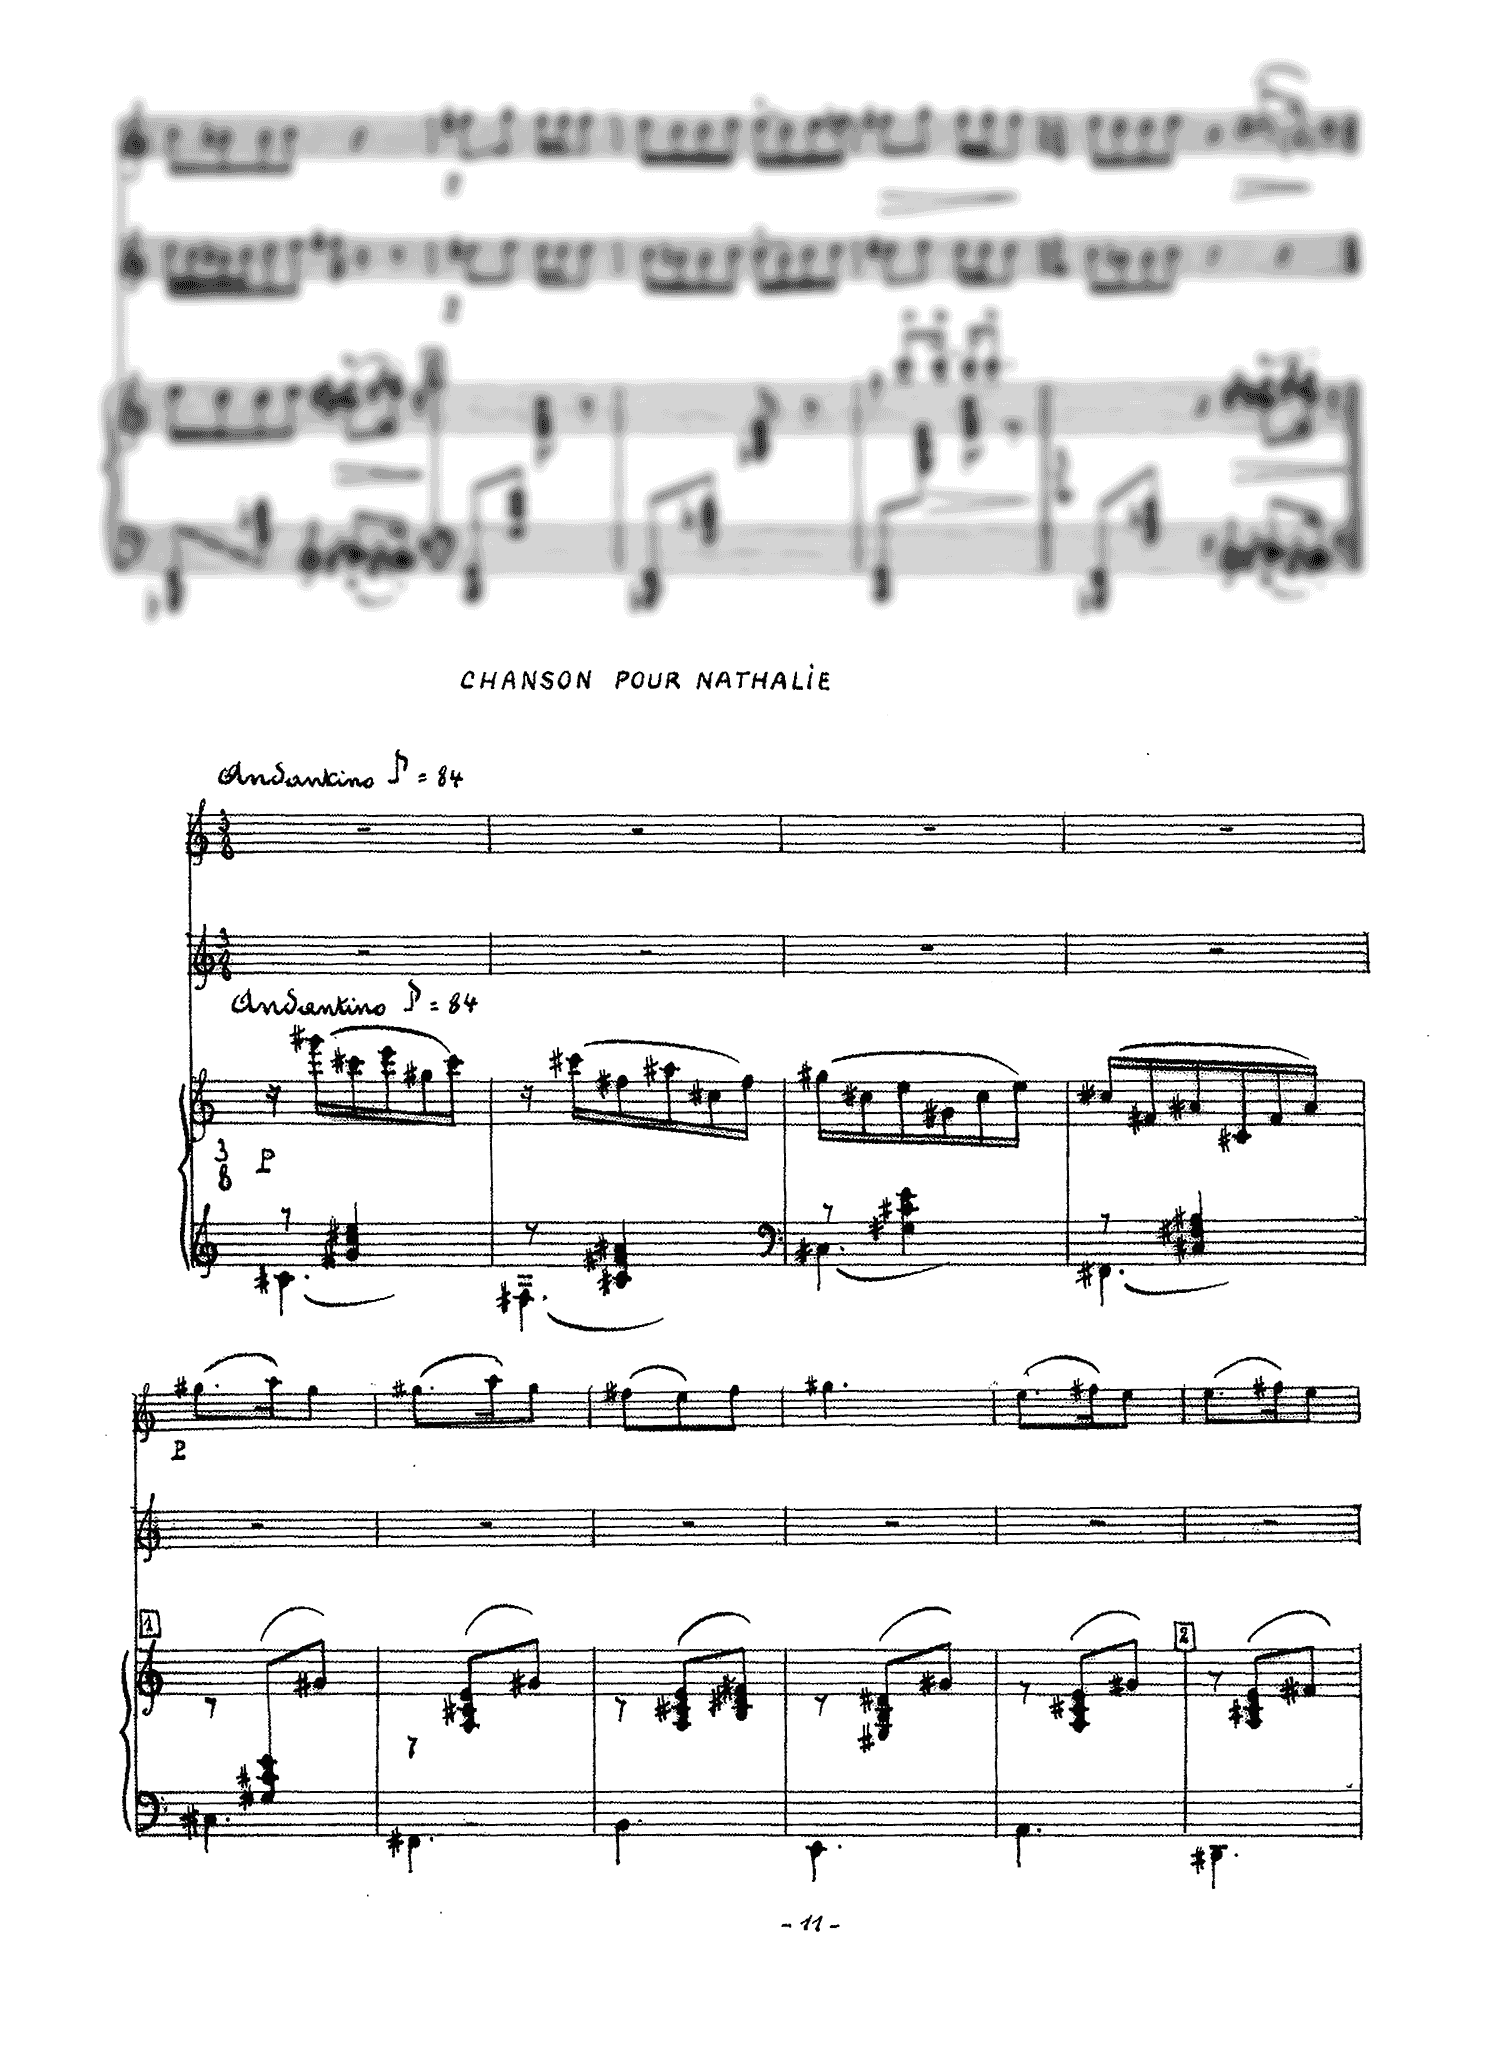 Pierre Max Dubois Suite for clarinet, violin, & piano - Movement 3